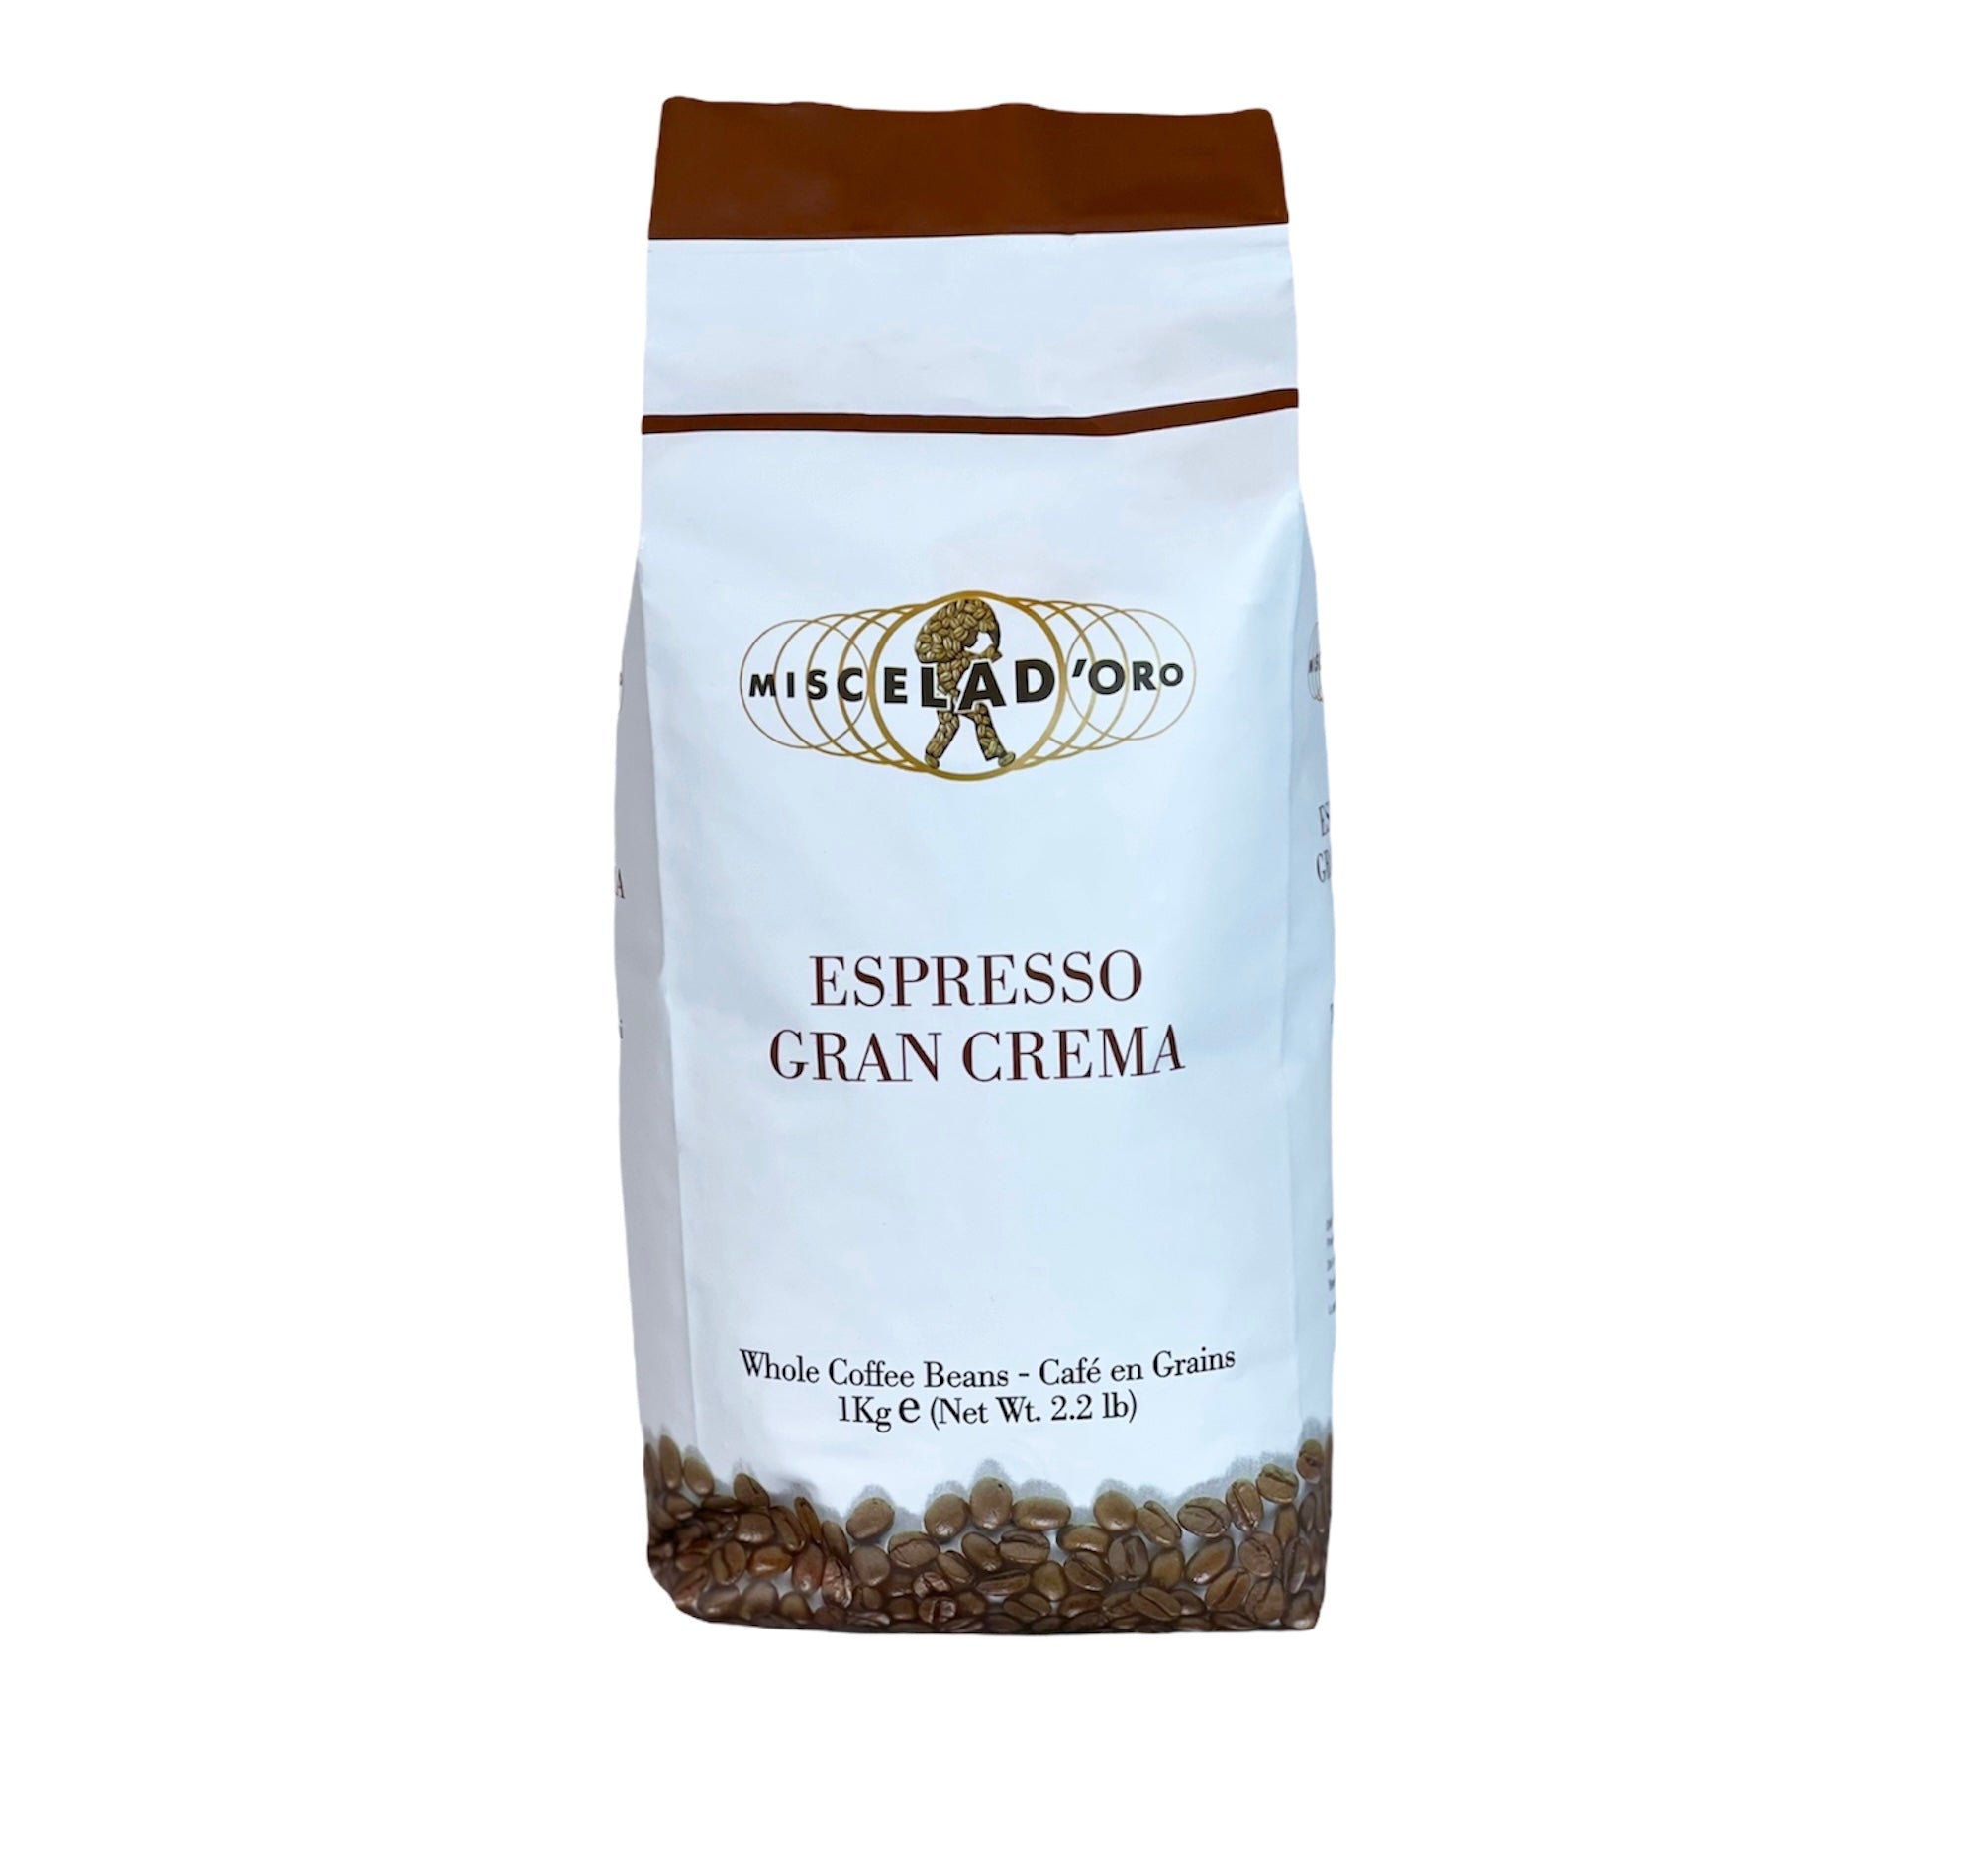 Miscelan d' oro Espresso Gran Crema Italian coffee blend, whole coffee beans, 1 kg bag.